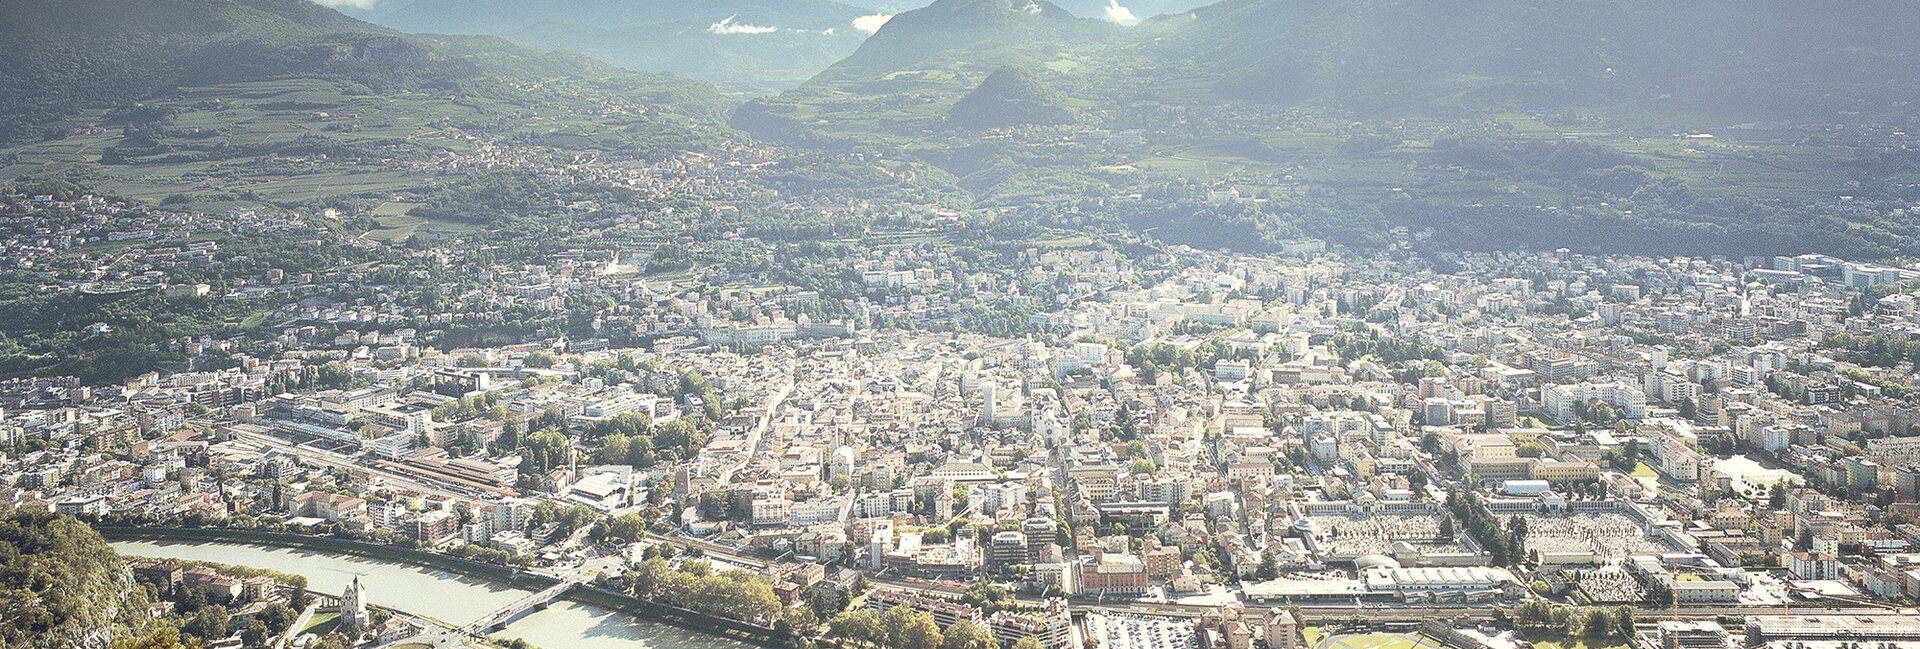 Trento, Monte Bondone and the Piné plateau